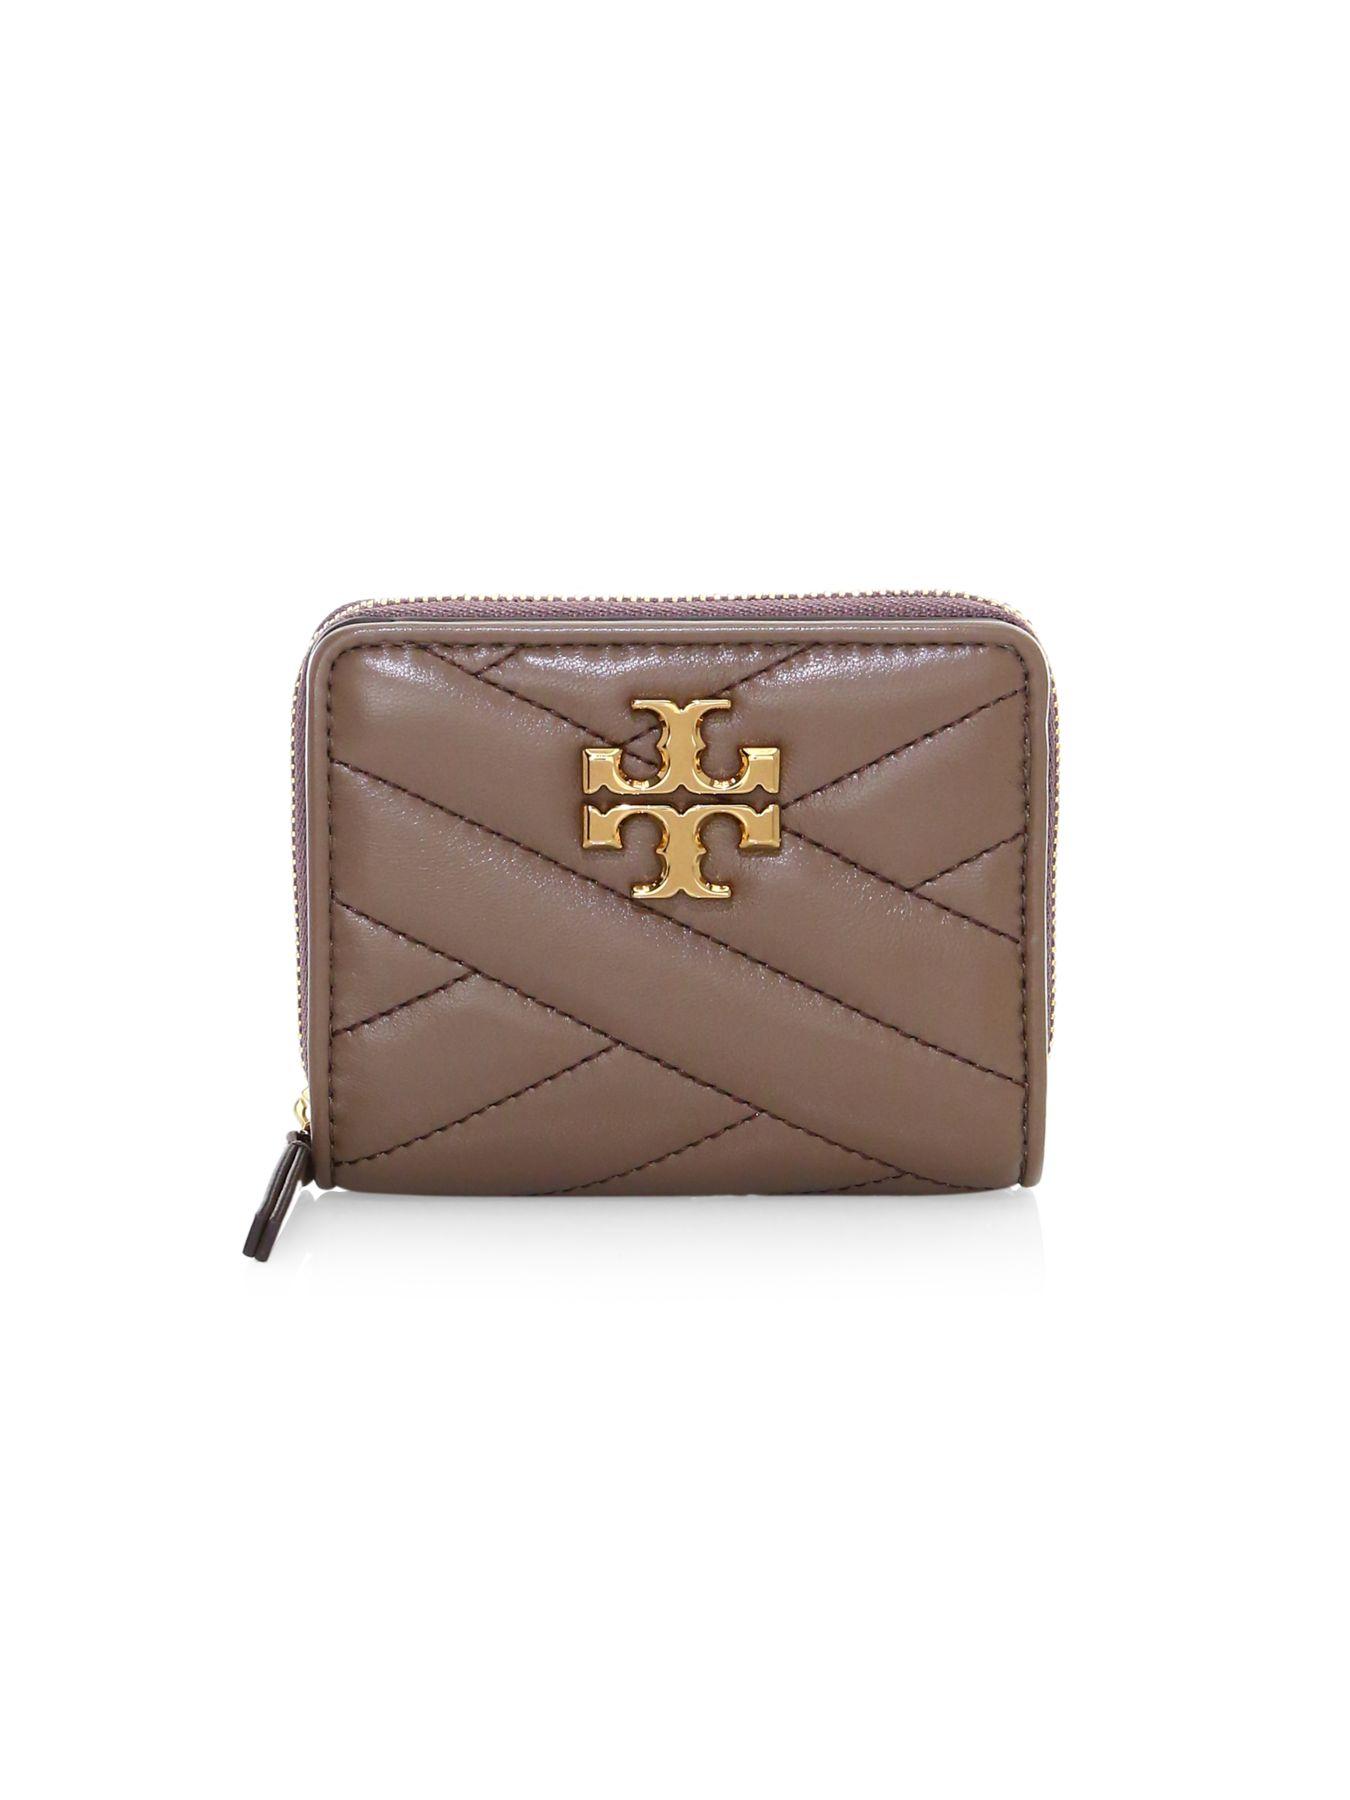 Tory Burch Leather Kira Chevron Bi-fold Wallet in Brown,Gold Tone ...